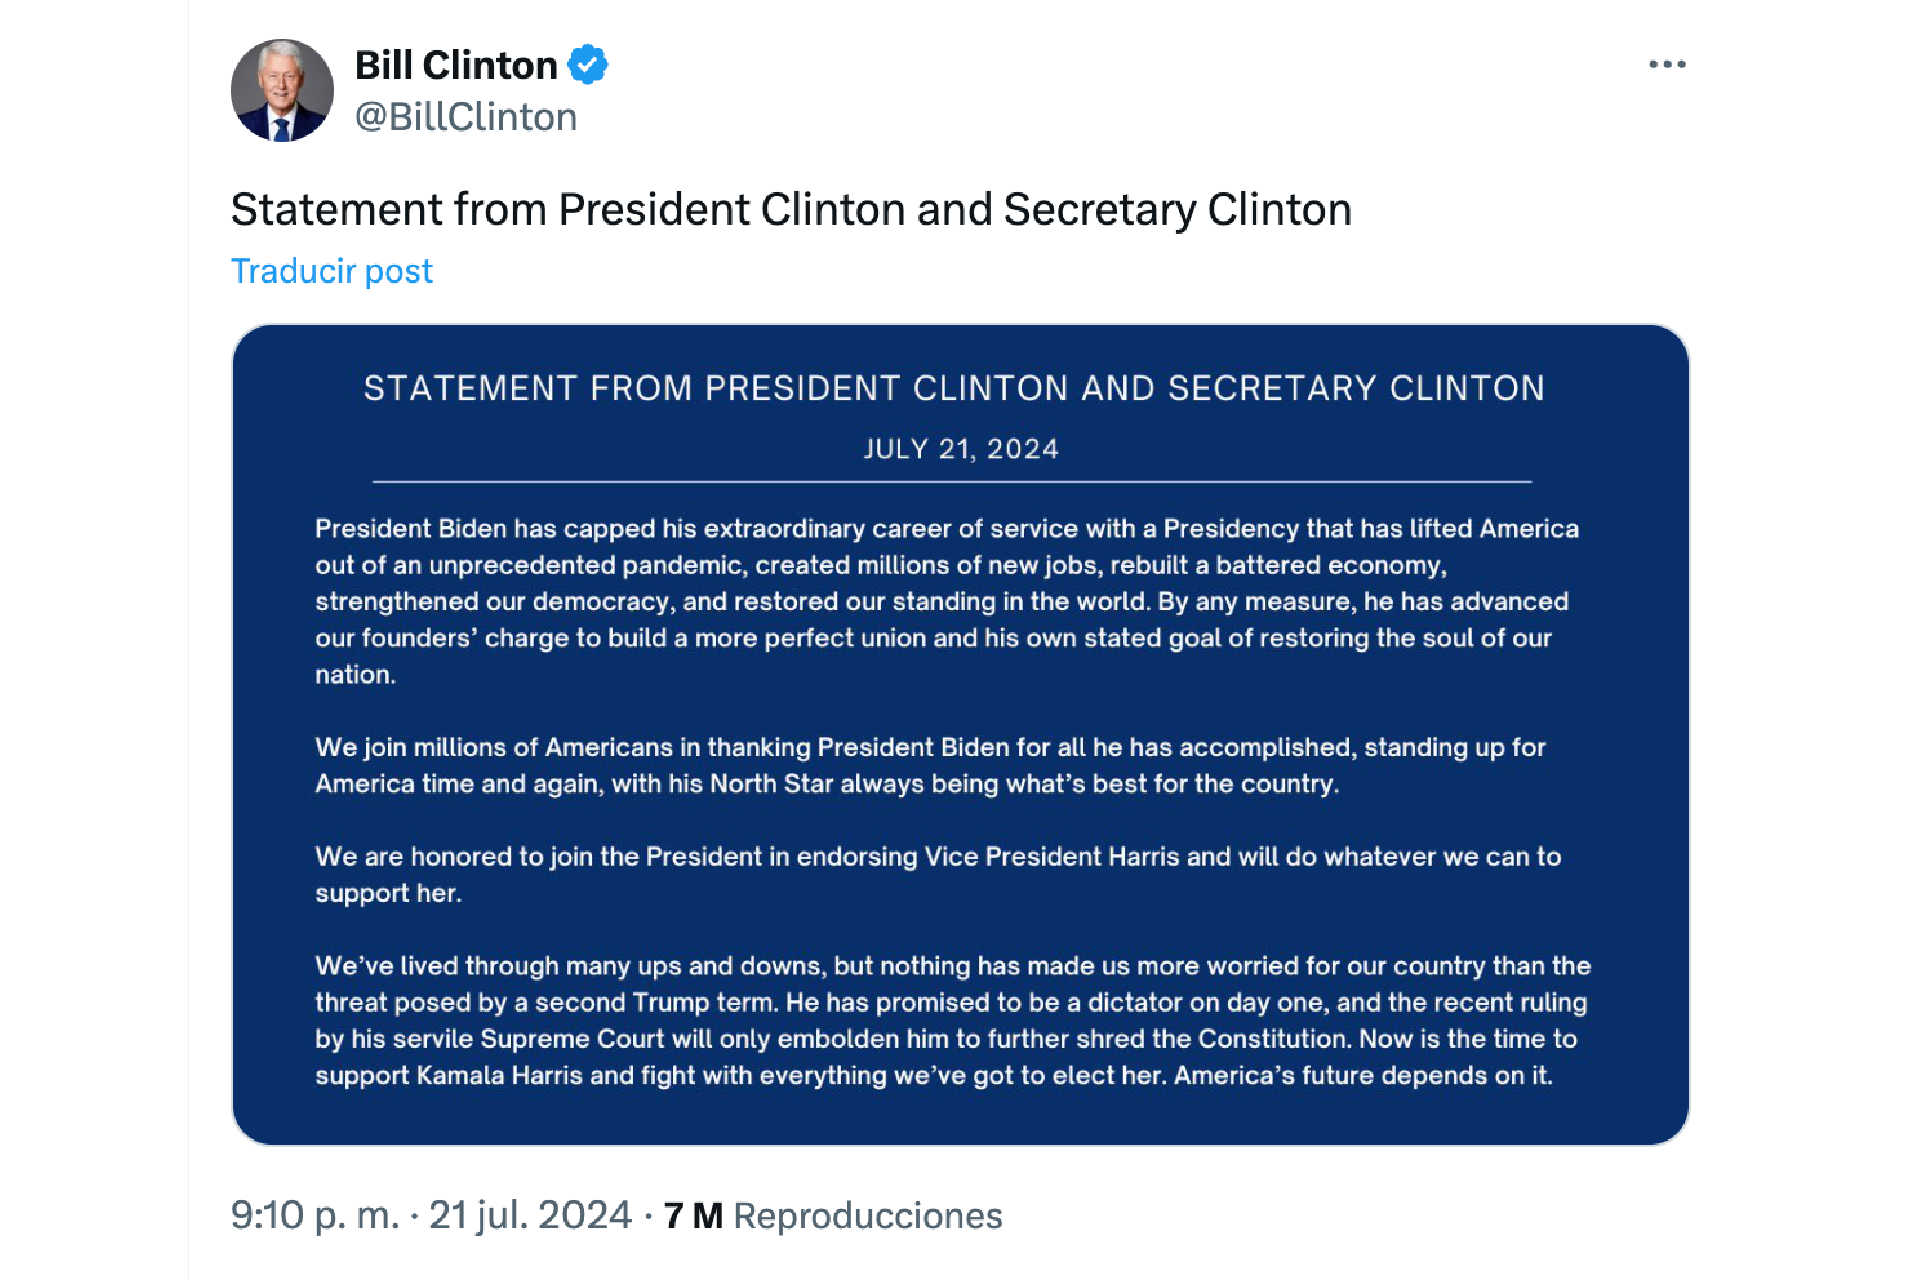 Hillary and Bill Clinton support Kamala